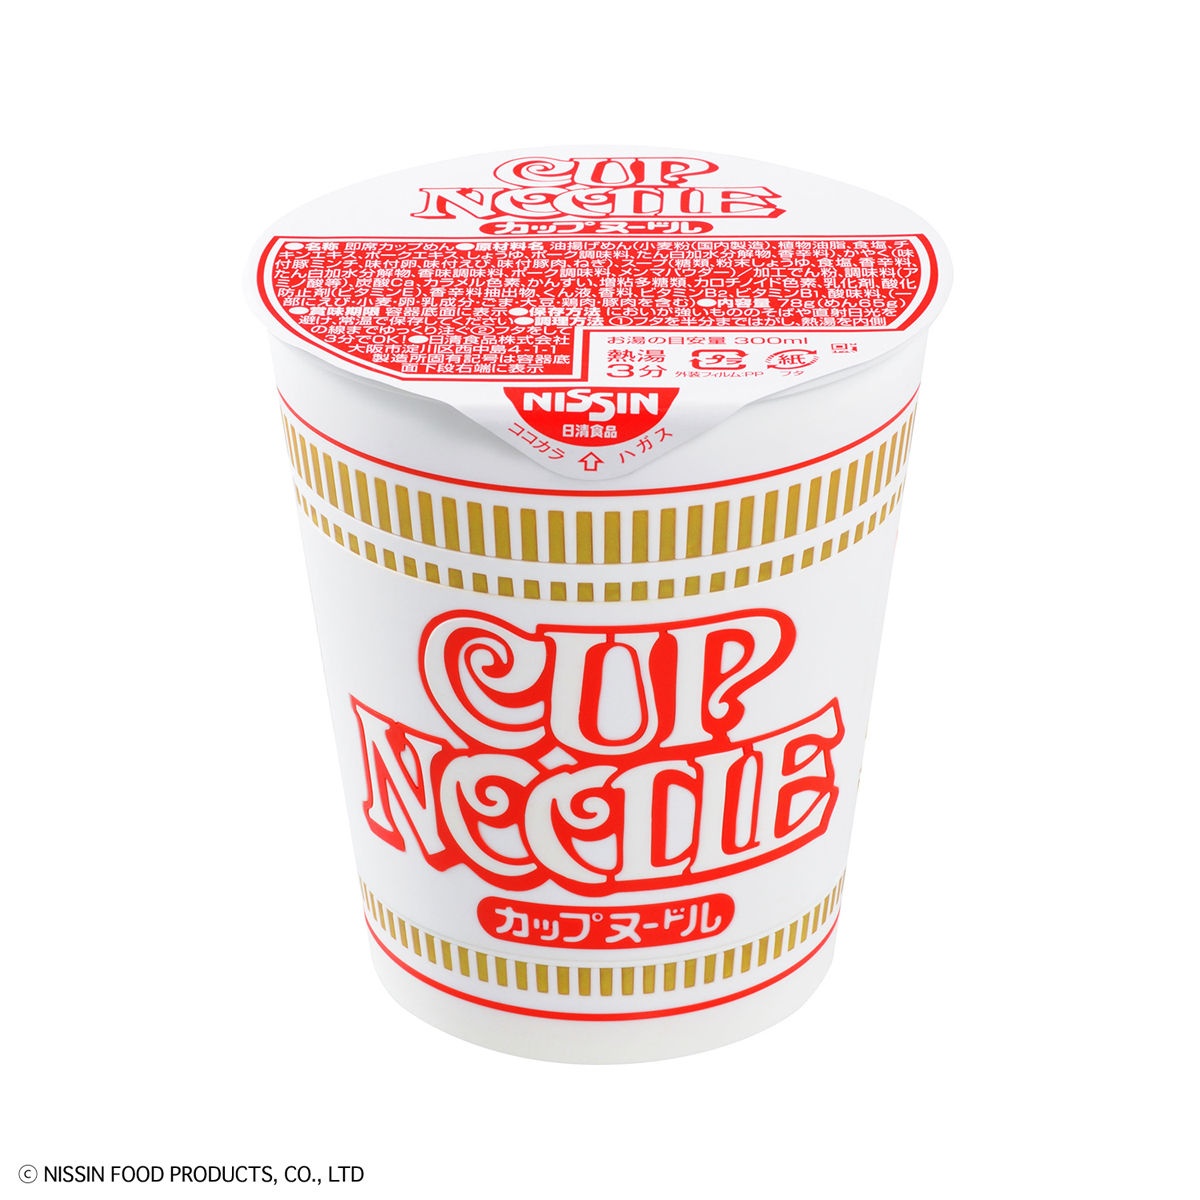 BEST HIT CHRONICLE Cup Noodles